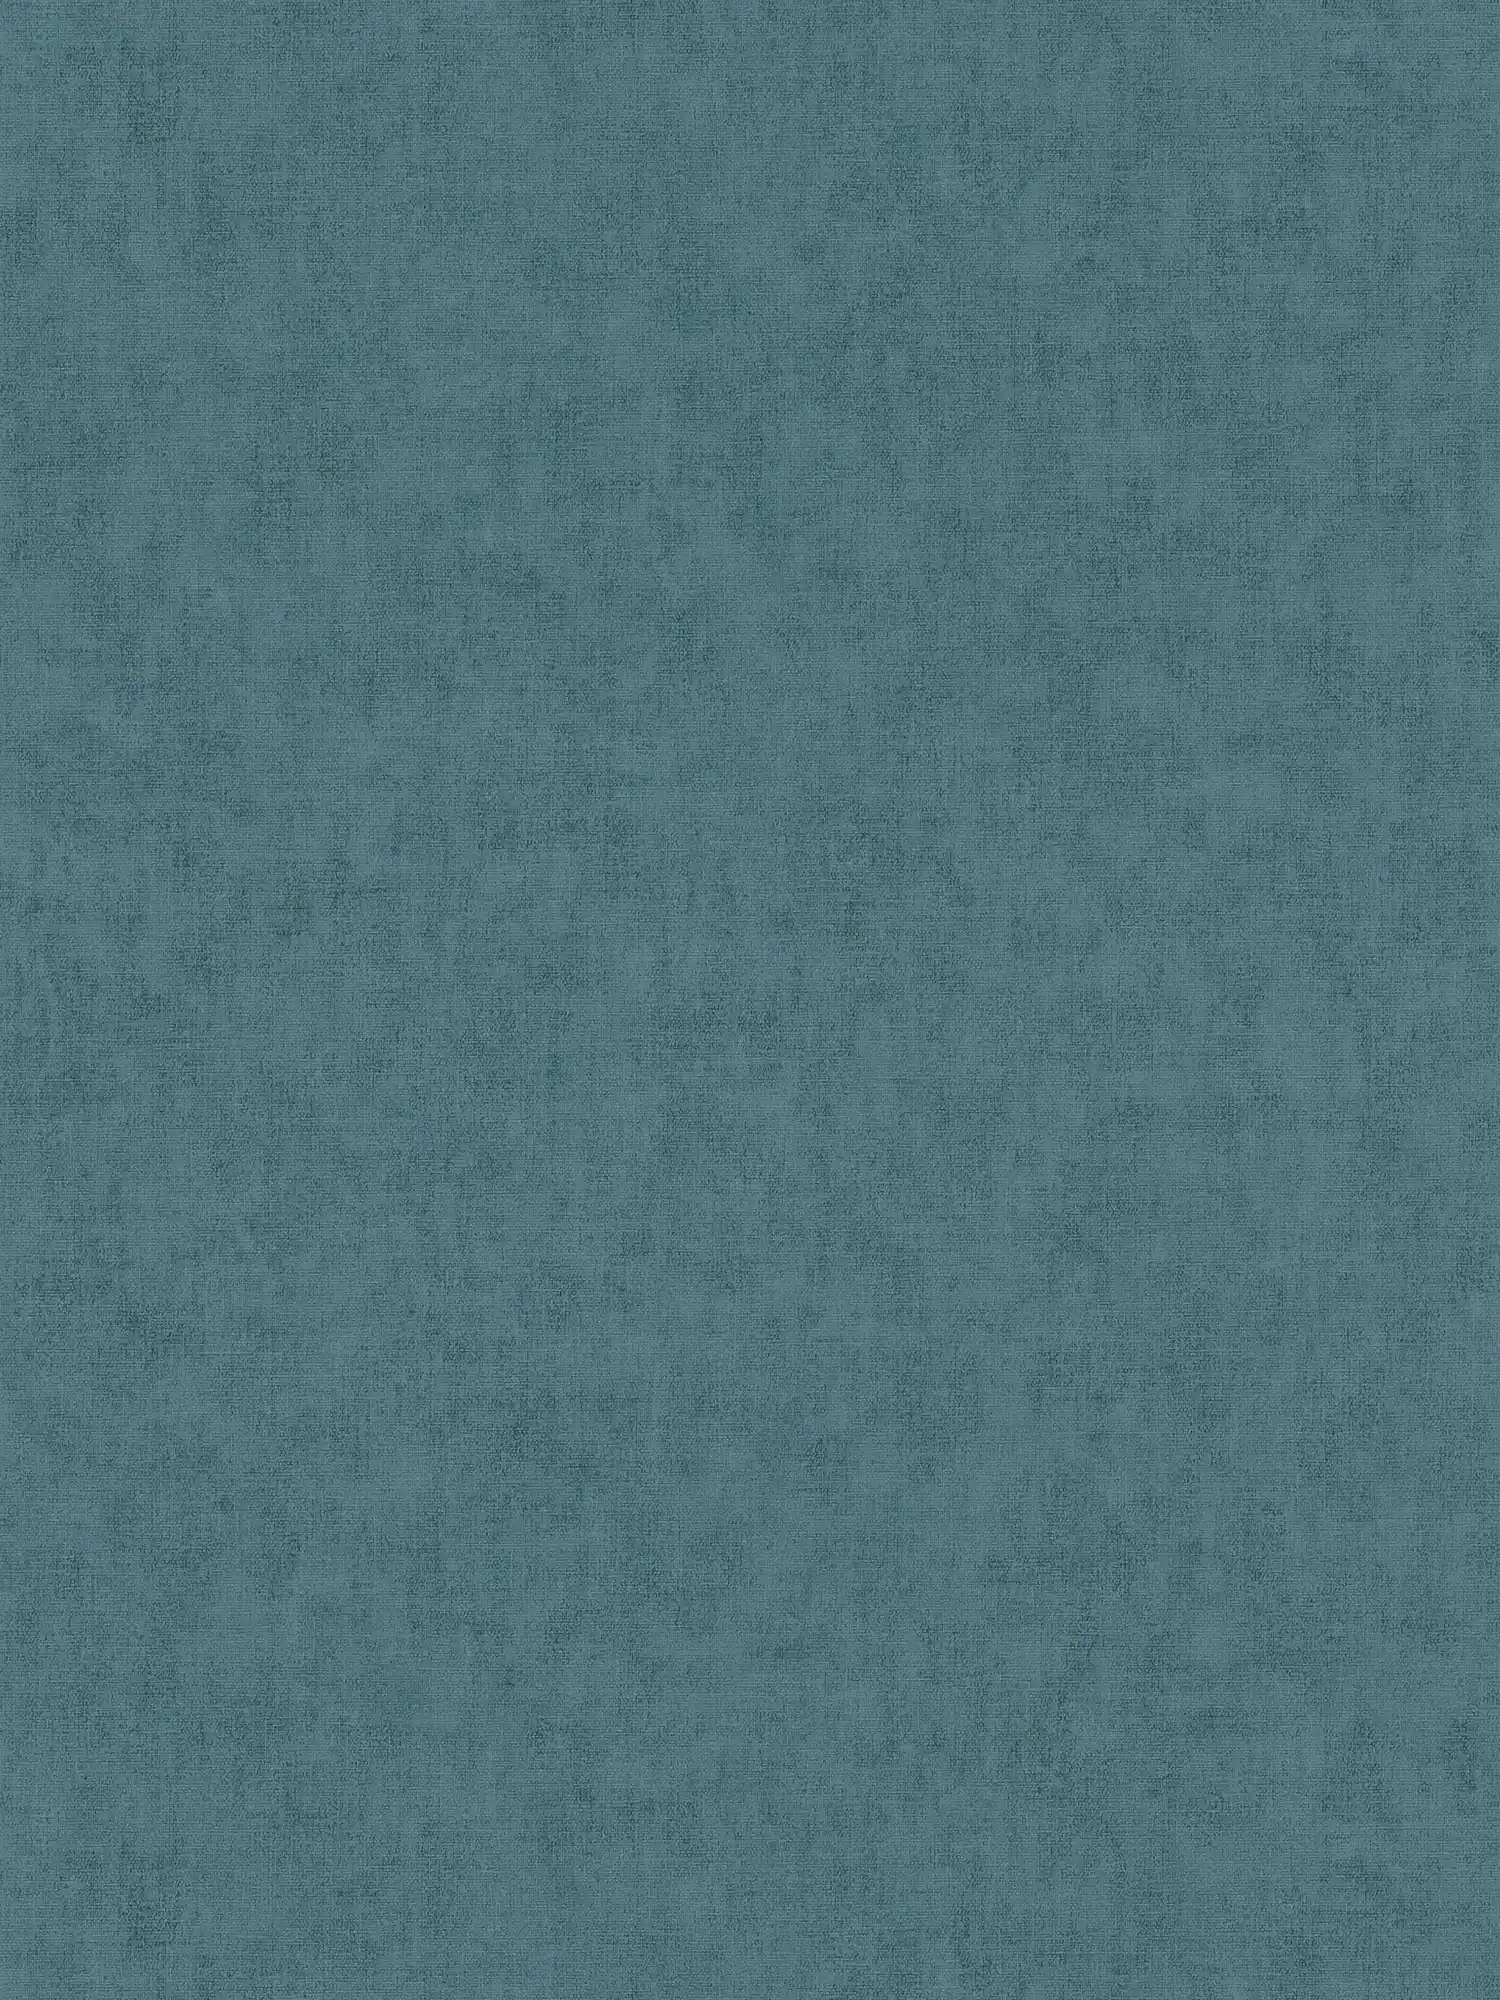 Papel pintado no tejido de estilo escandinavo con aspecto textil - azul, gris
